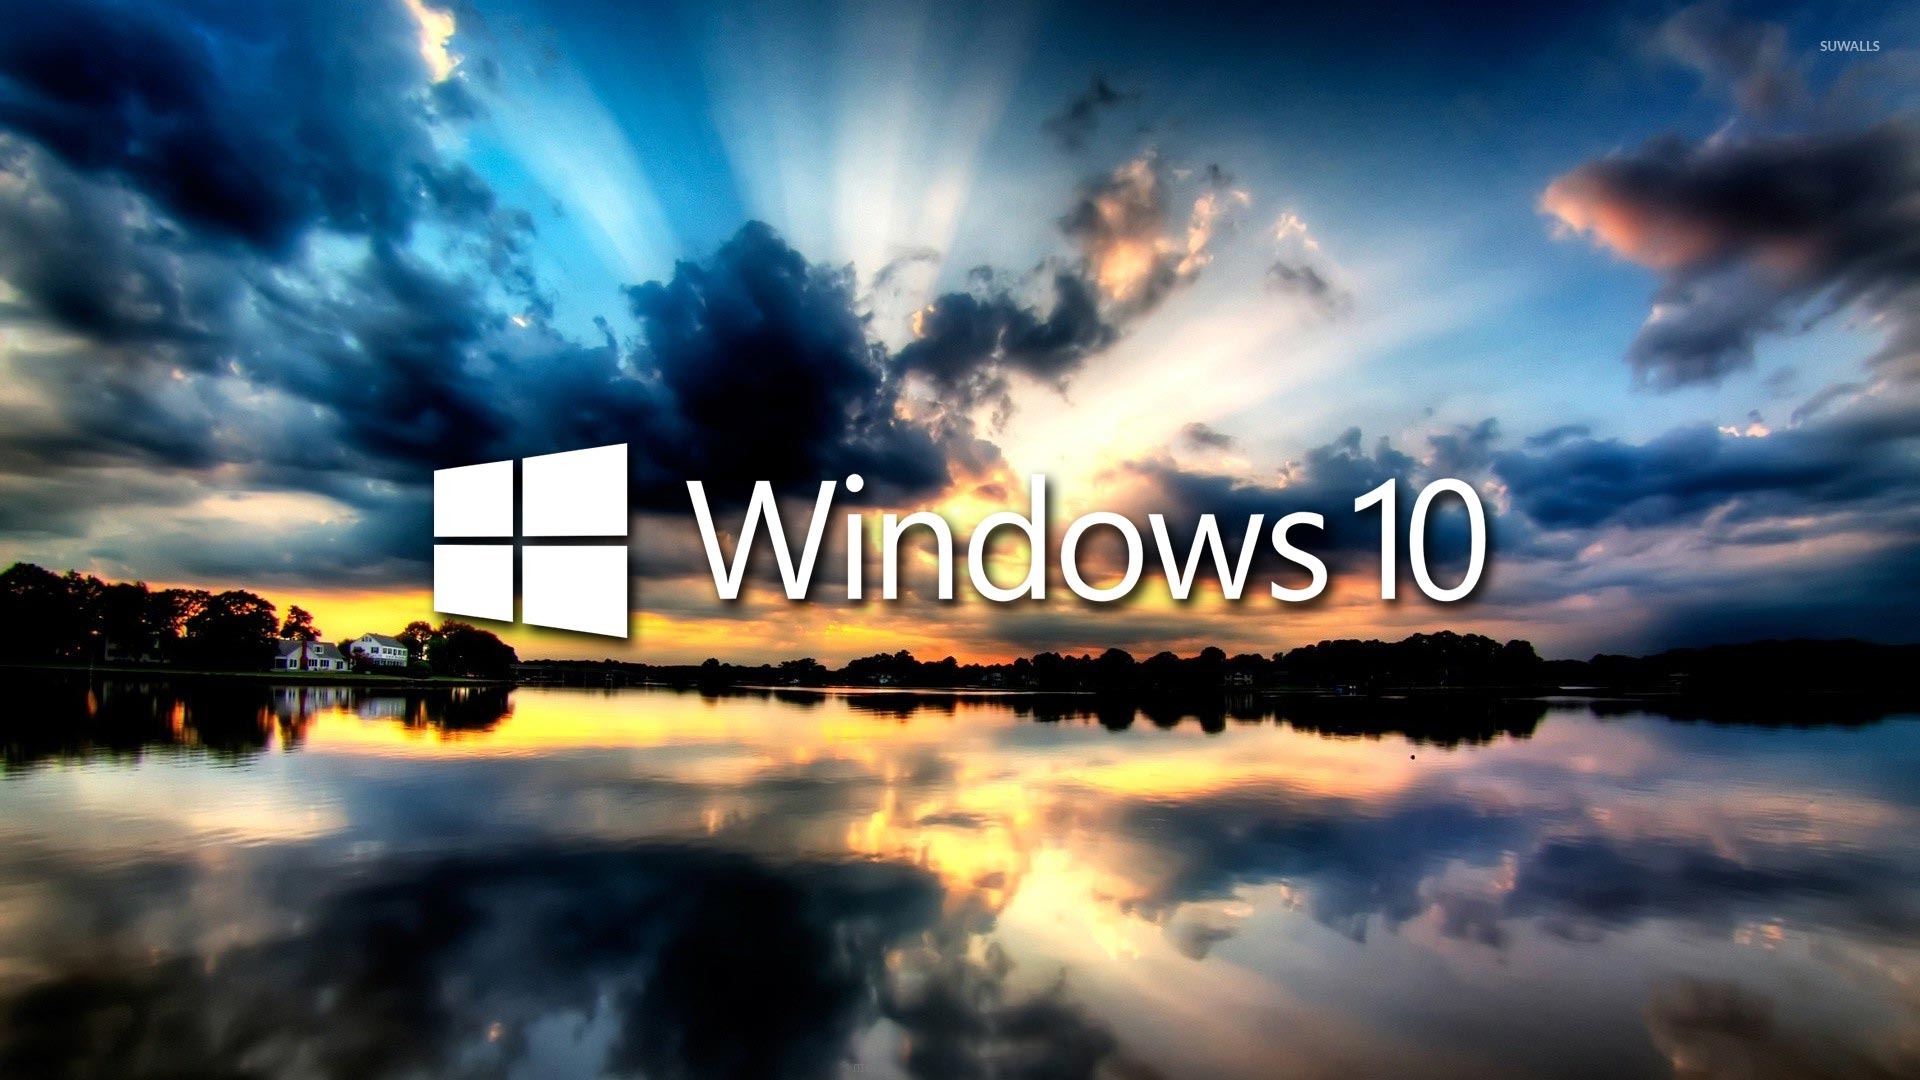 windows 10 live desktop background